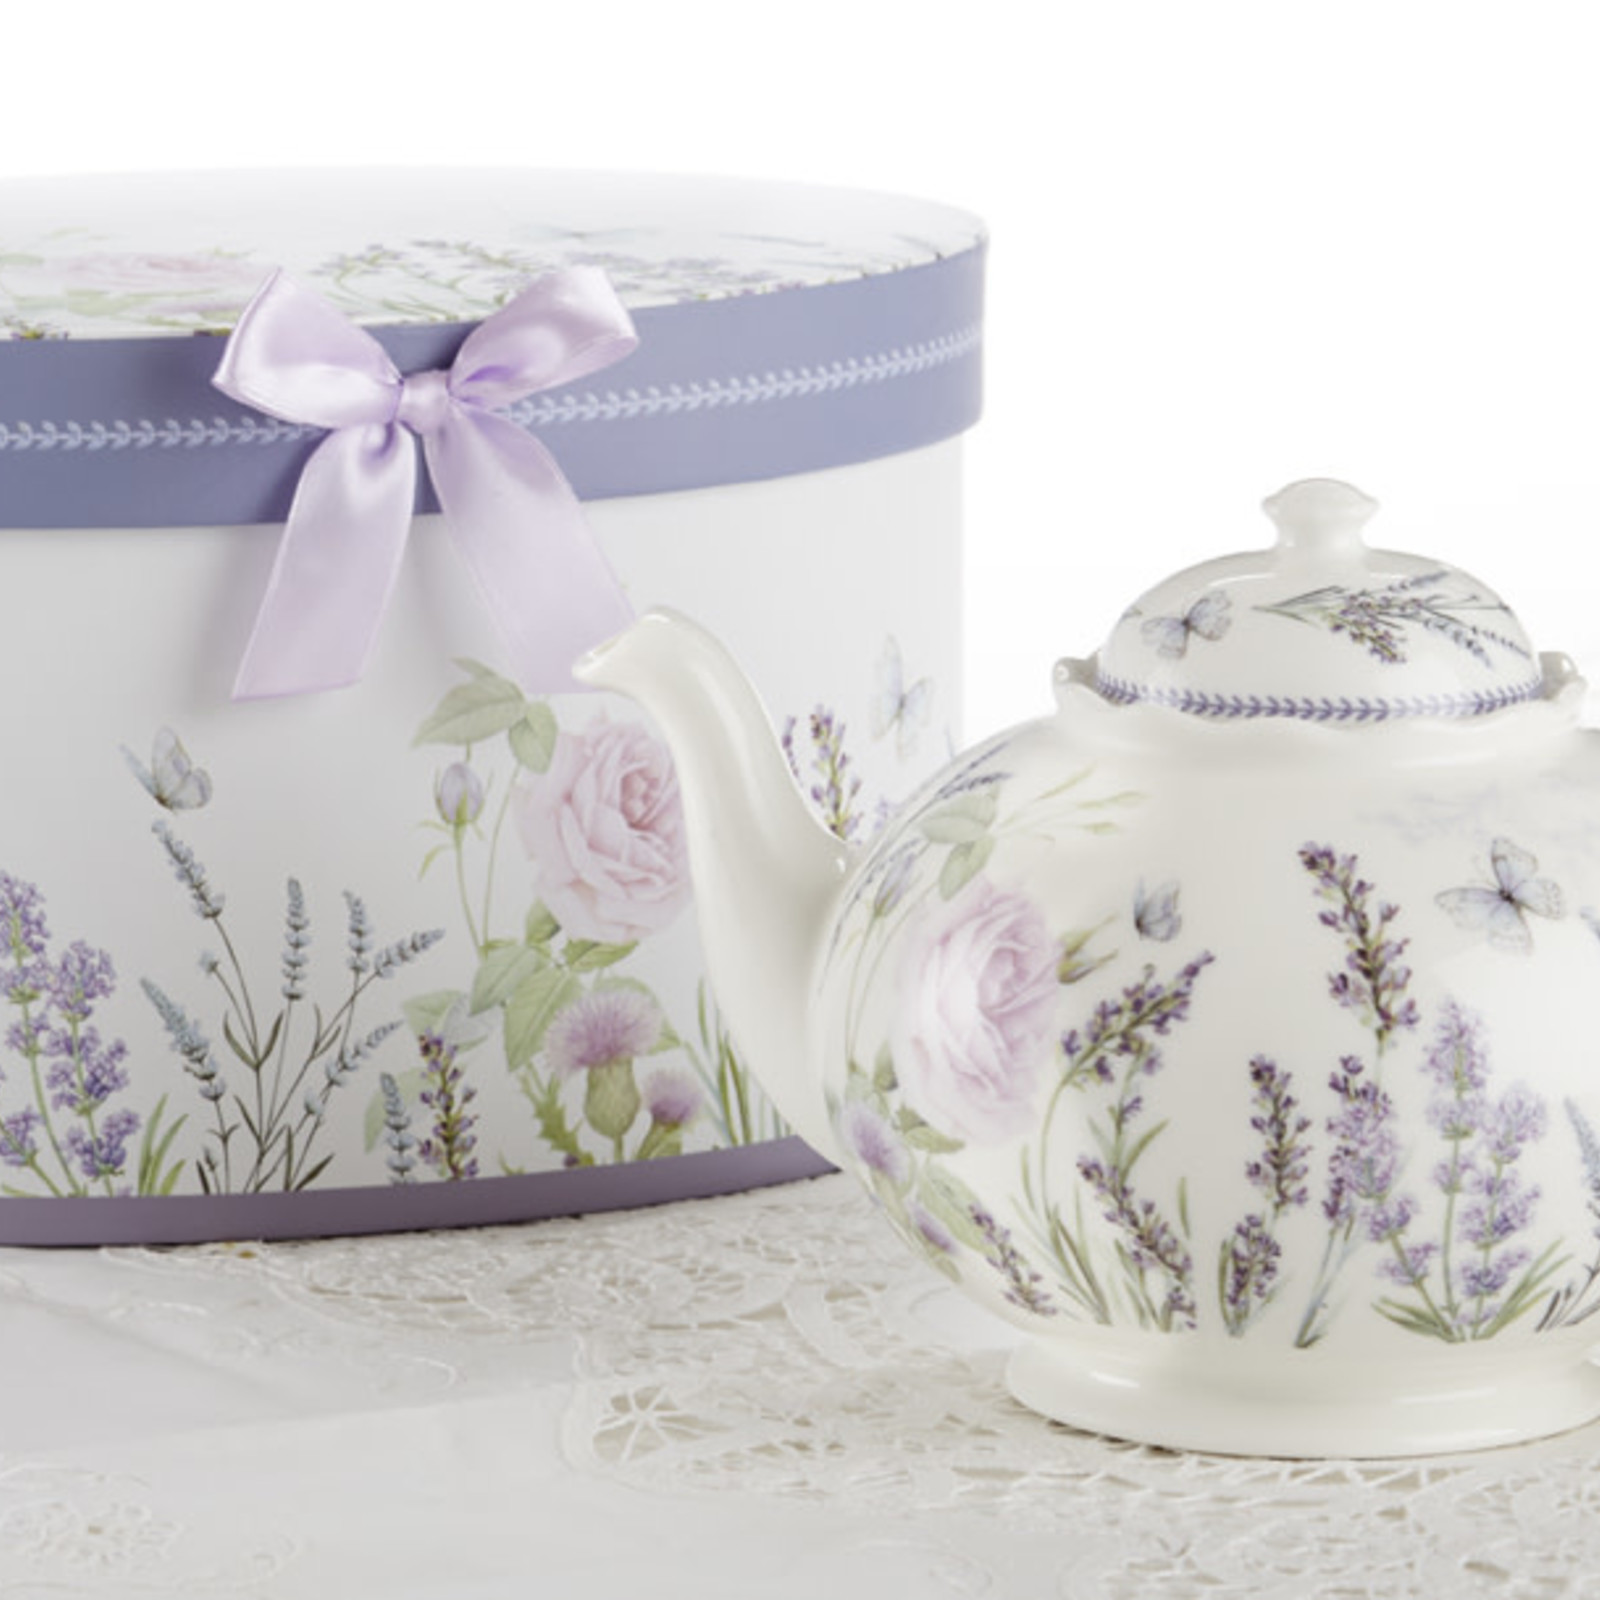 Delton Products 9.5 X 5.6" Porcelain Tea Pot In Gift Box, Lavender   8100-7 loading=